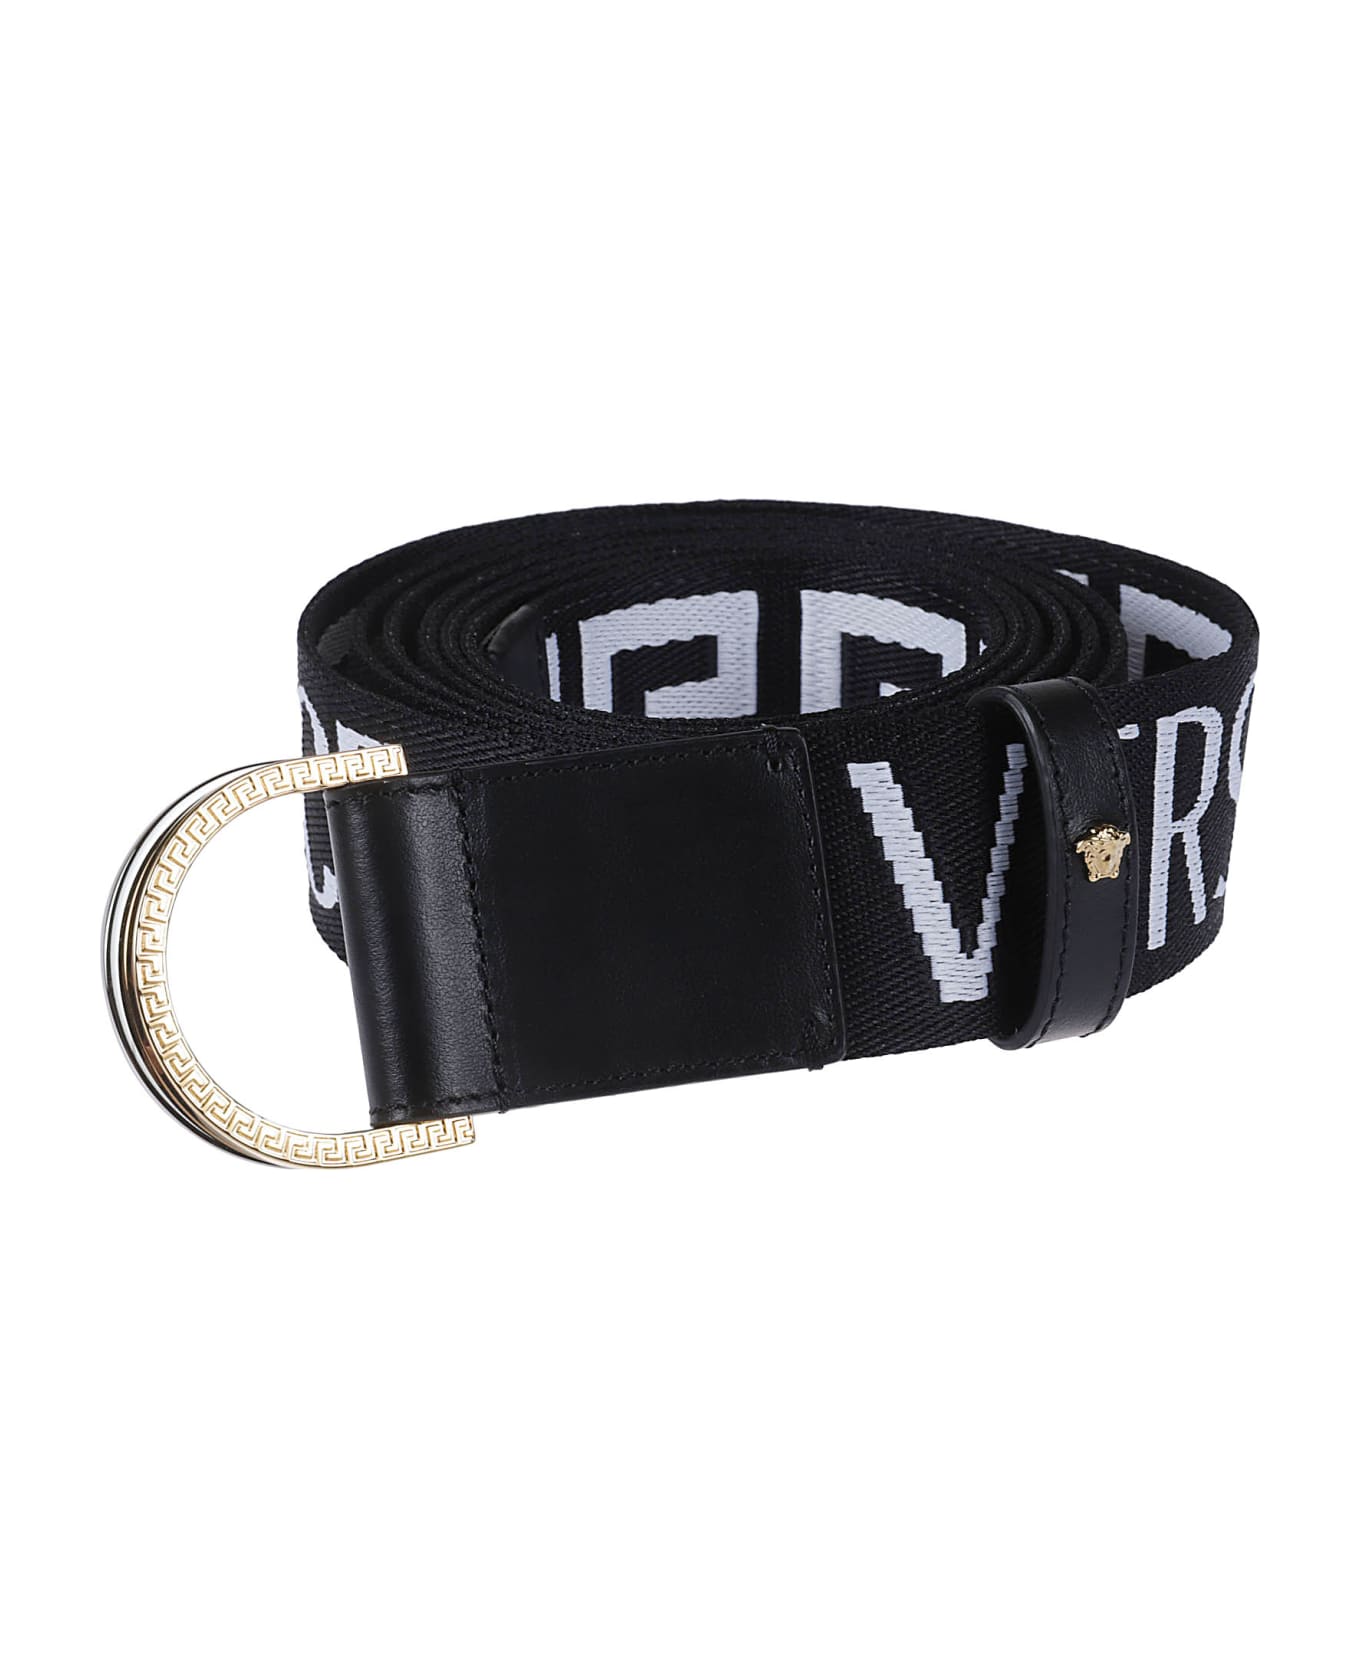 Versace Logo Detail Belt - Black/White